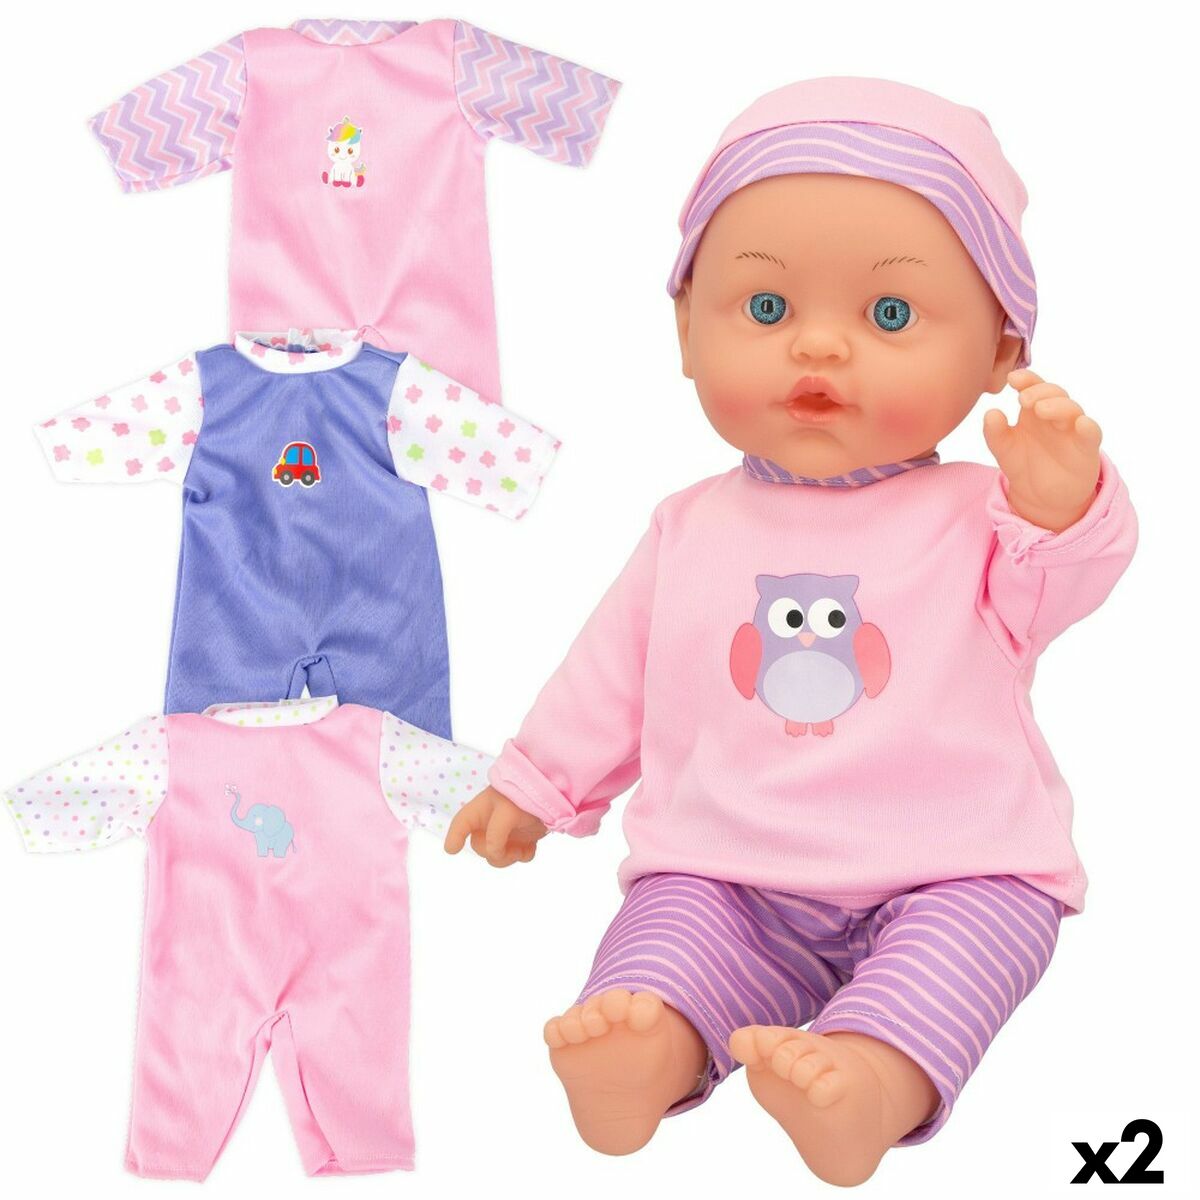 Baby doll Colorbaby 2 Unità 24 x 42 x 11 cm